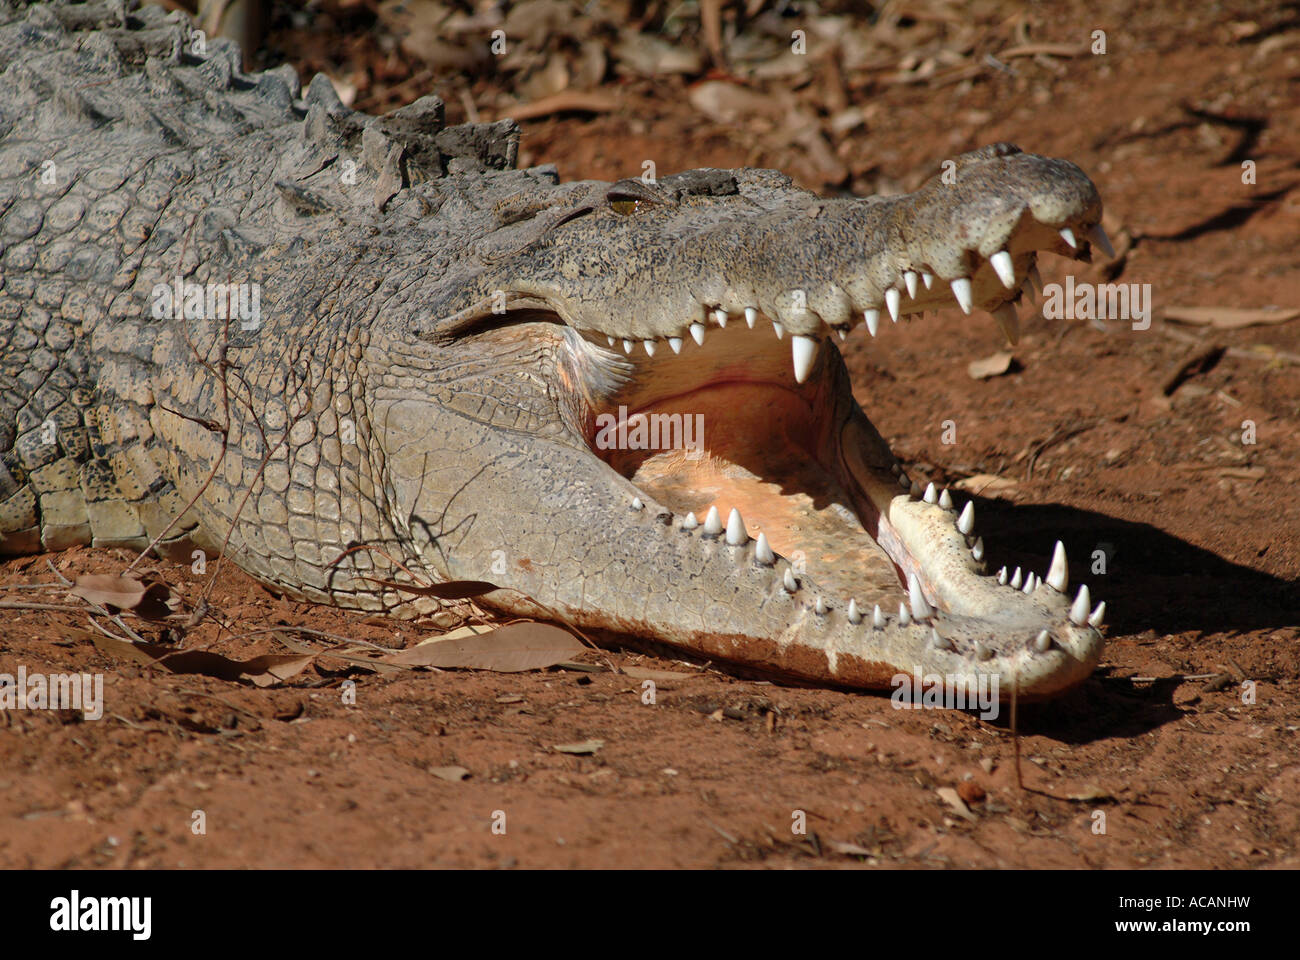 Saltwater crocodile (Crocodylus porosus), Australia Stock Photo